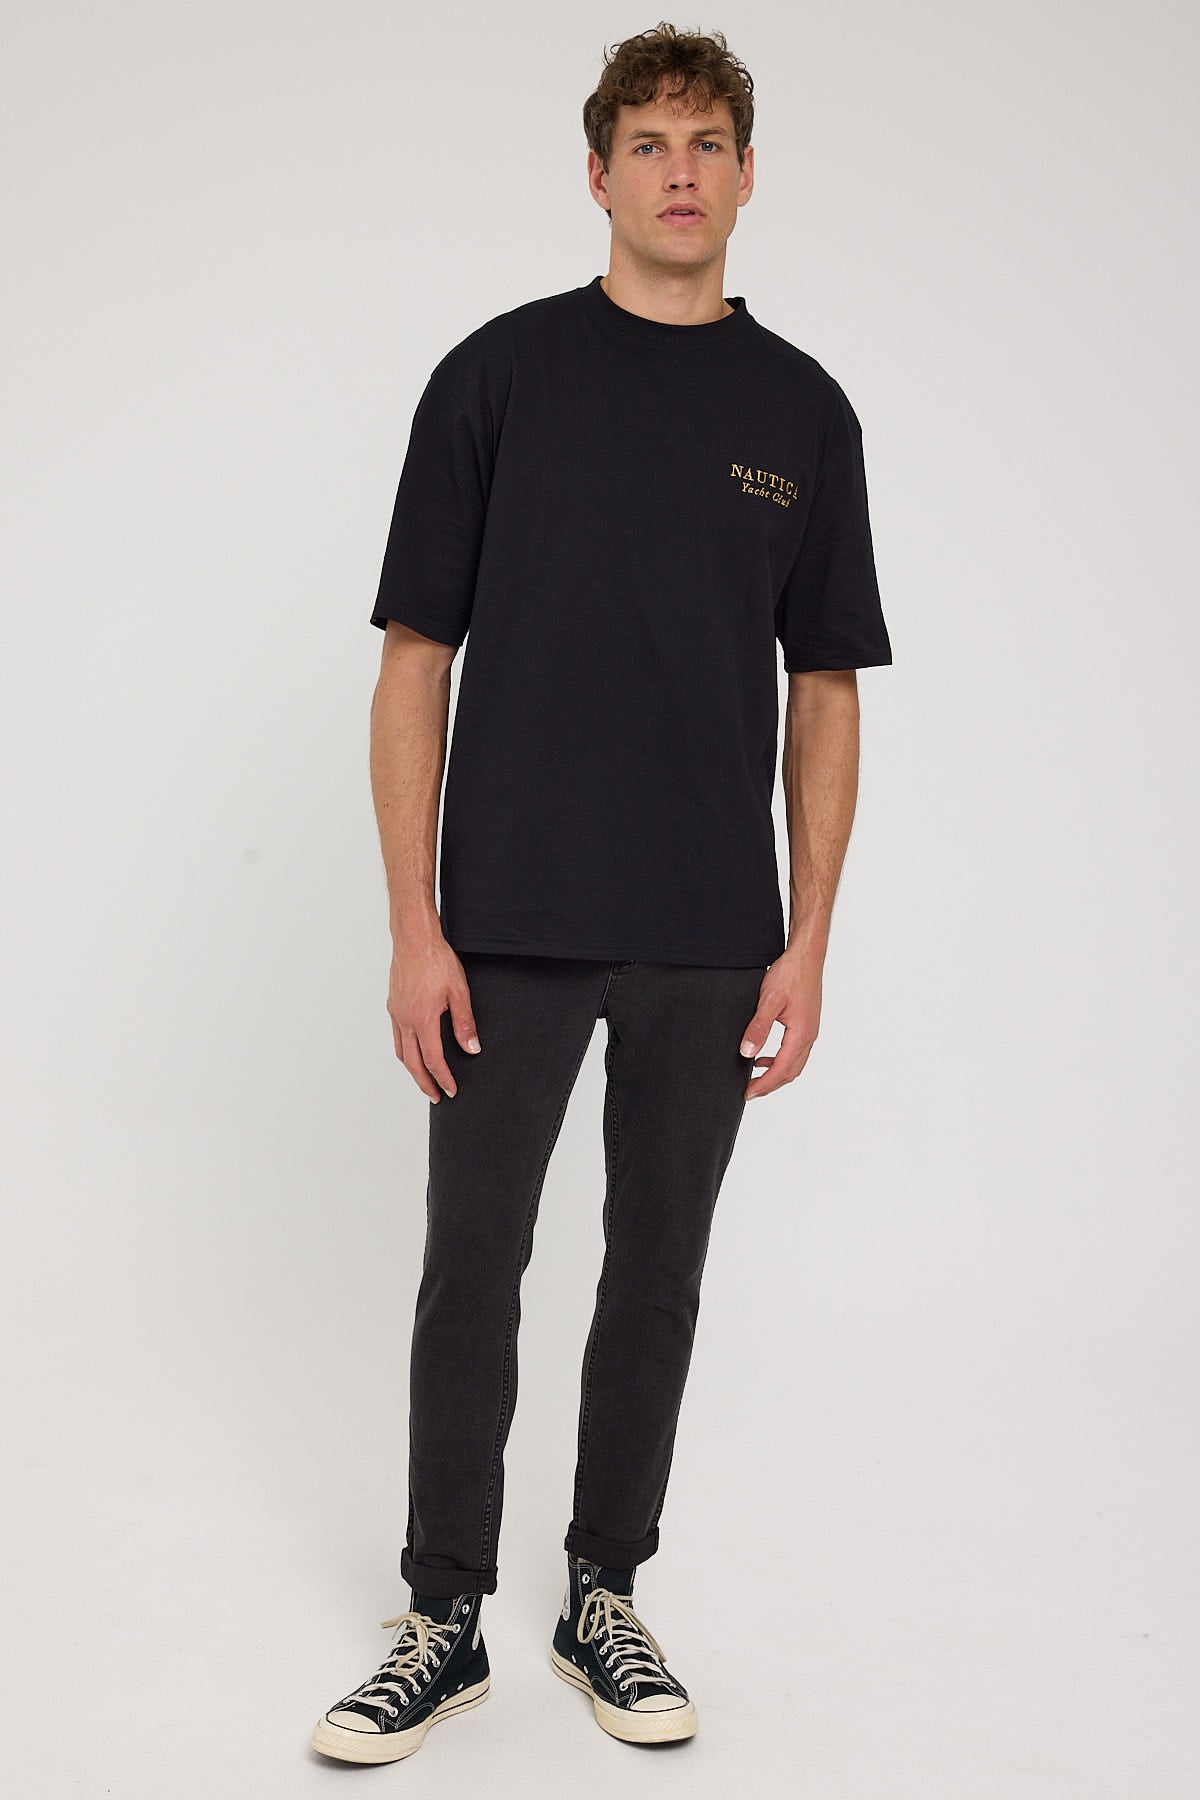 Nautica Federation T-Shirt Black